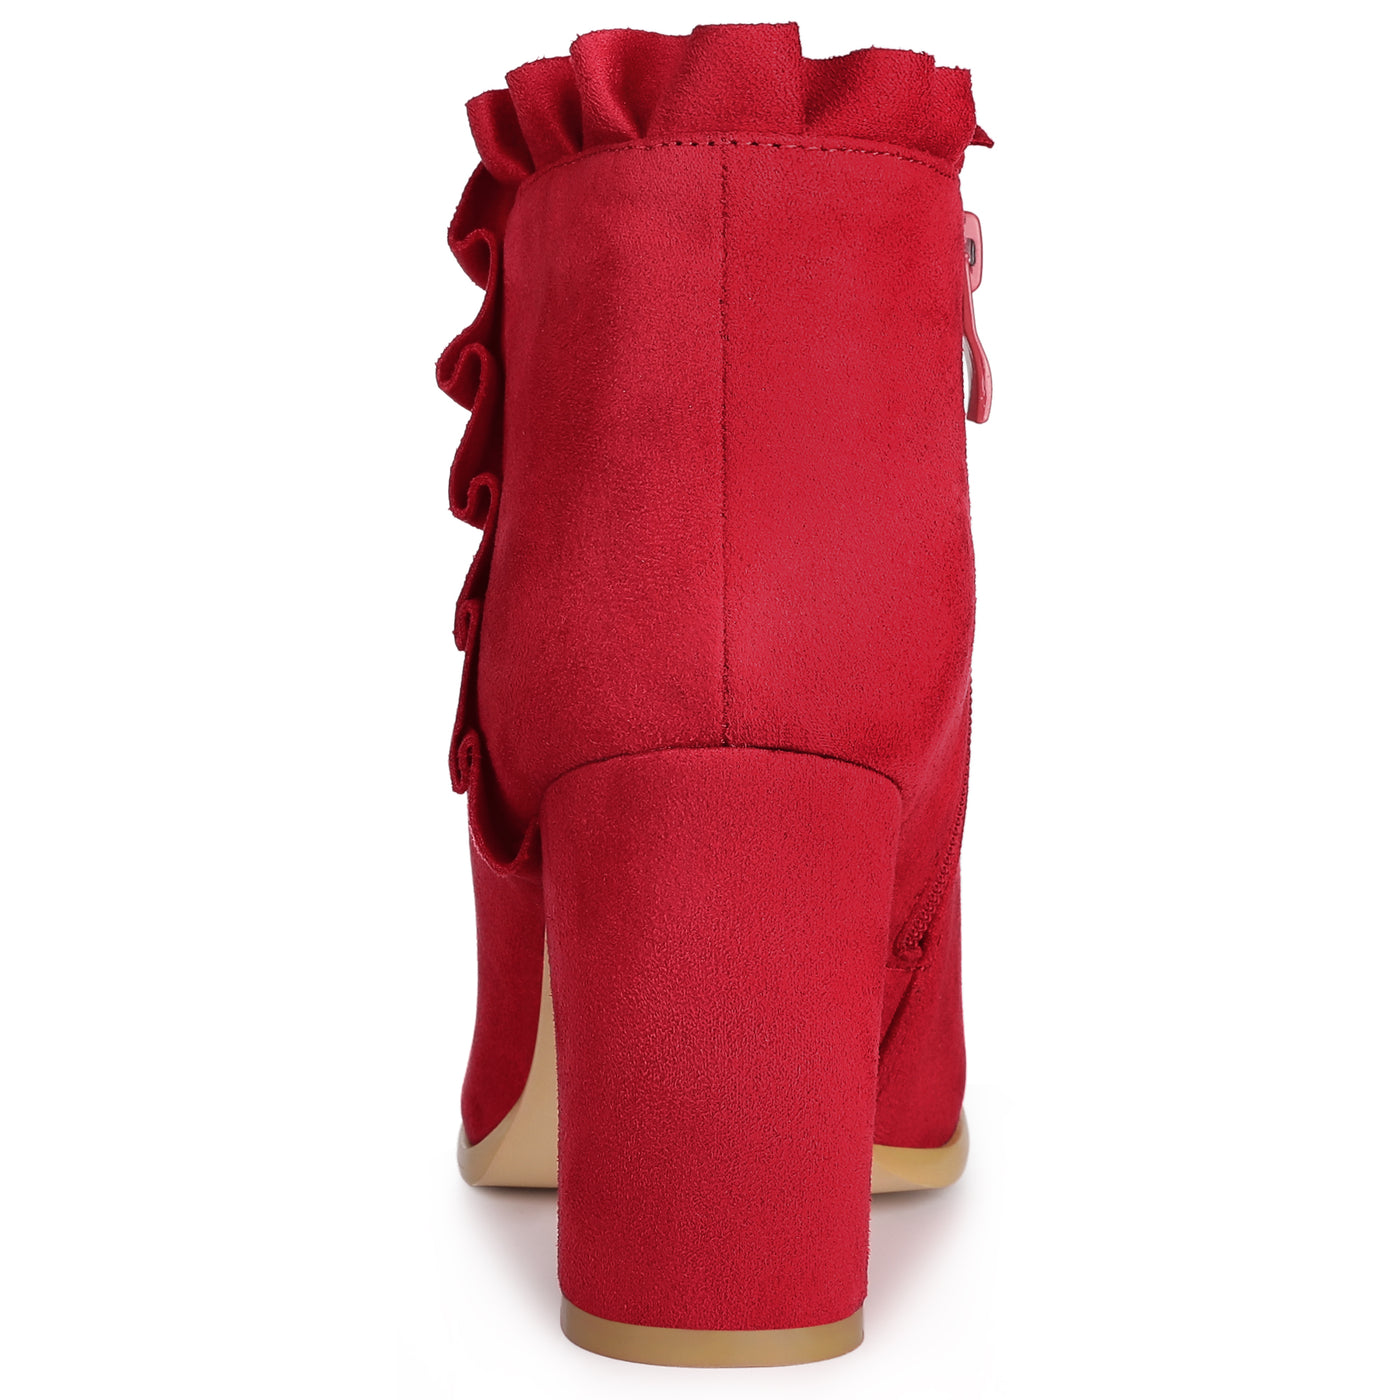 Bublédon Perphy Women's Ruffle Block High Heels Ankle Boots